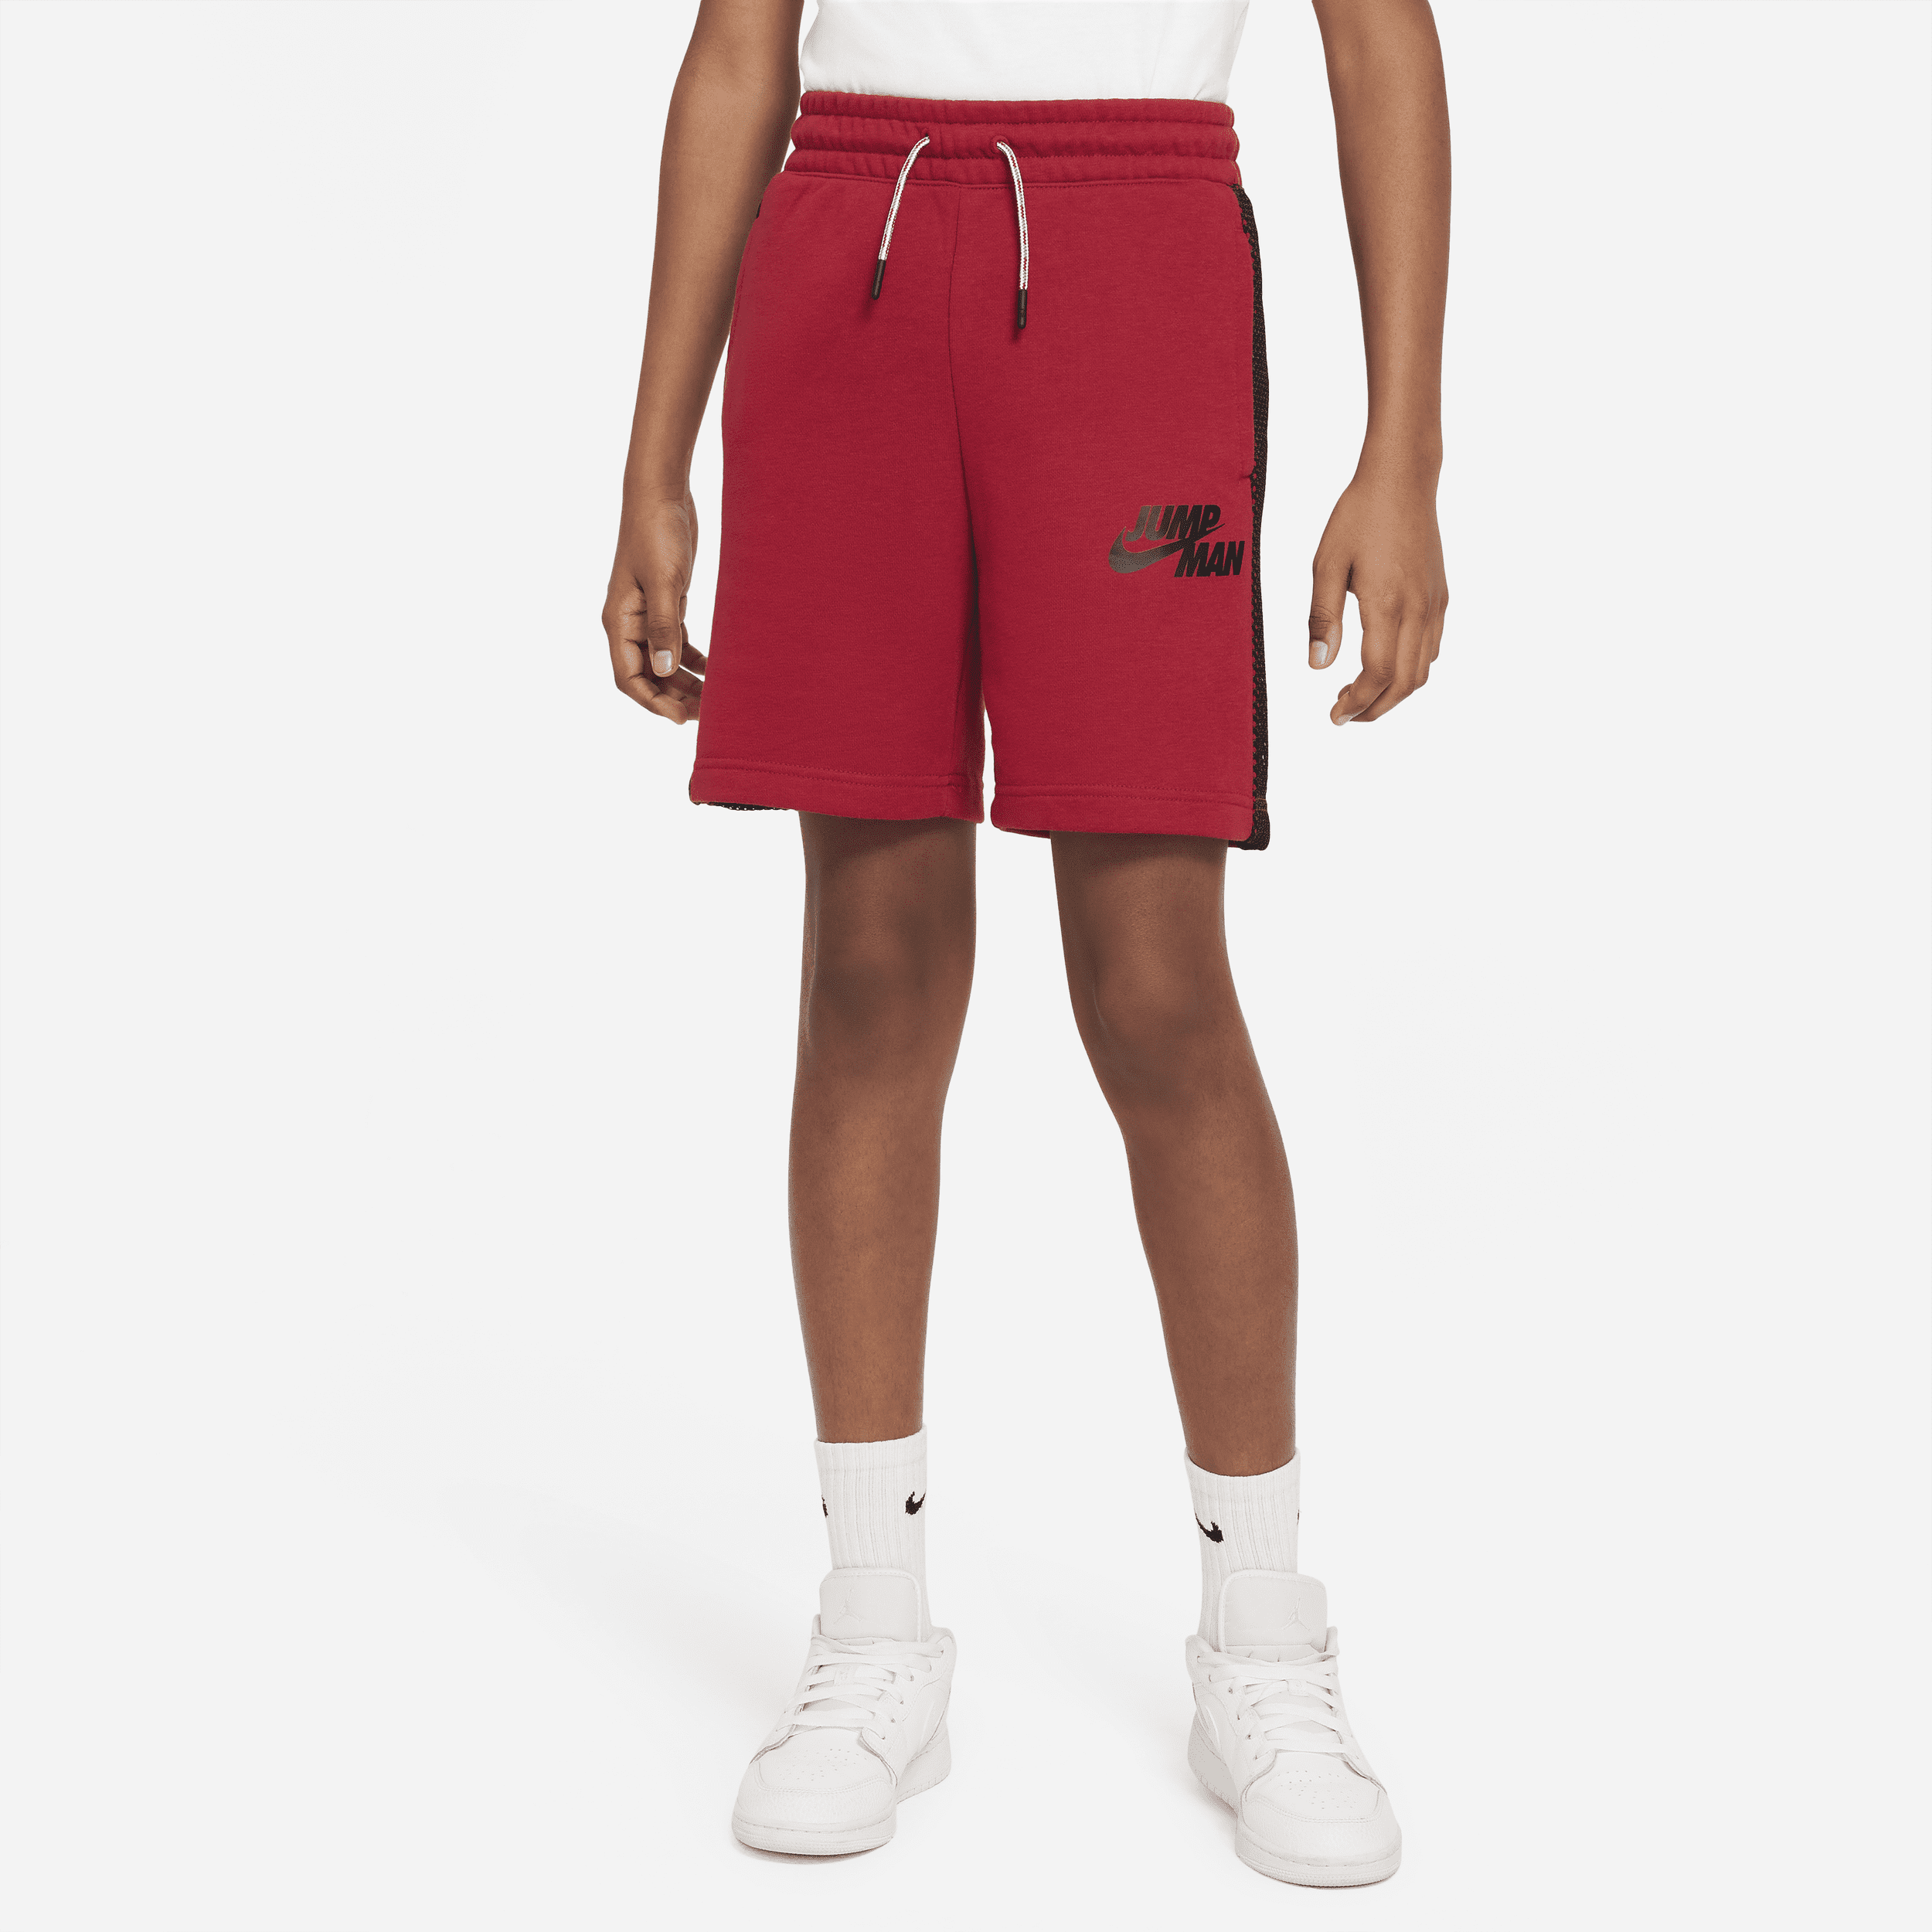 Jordan-shorts til større børn - rød